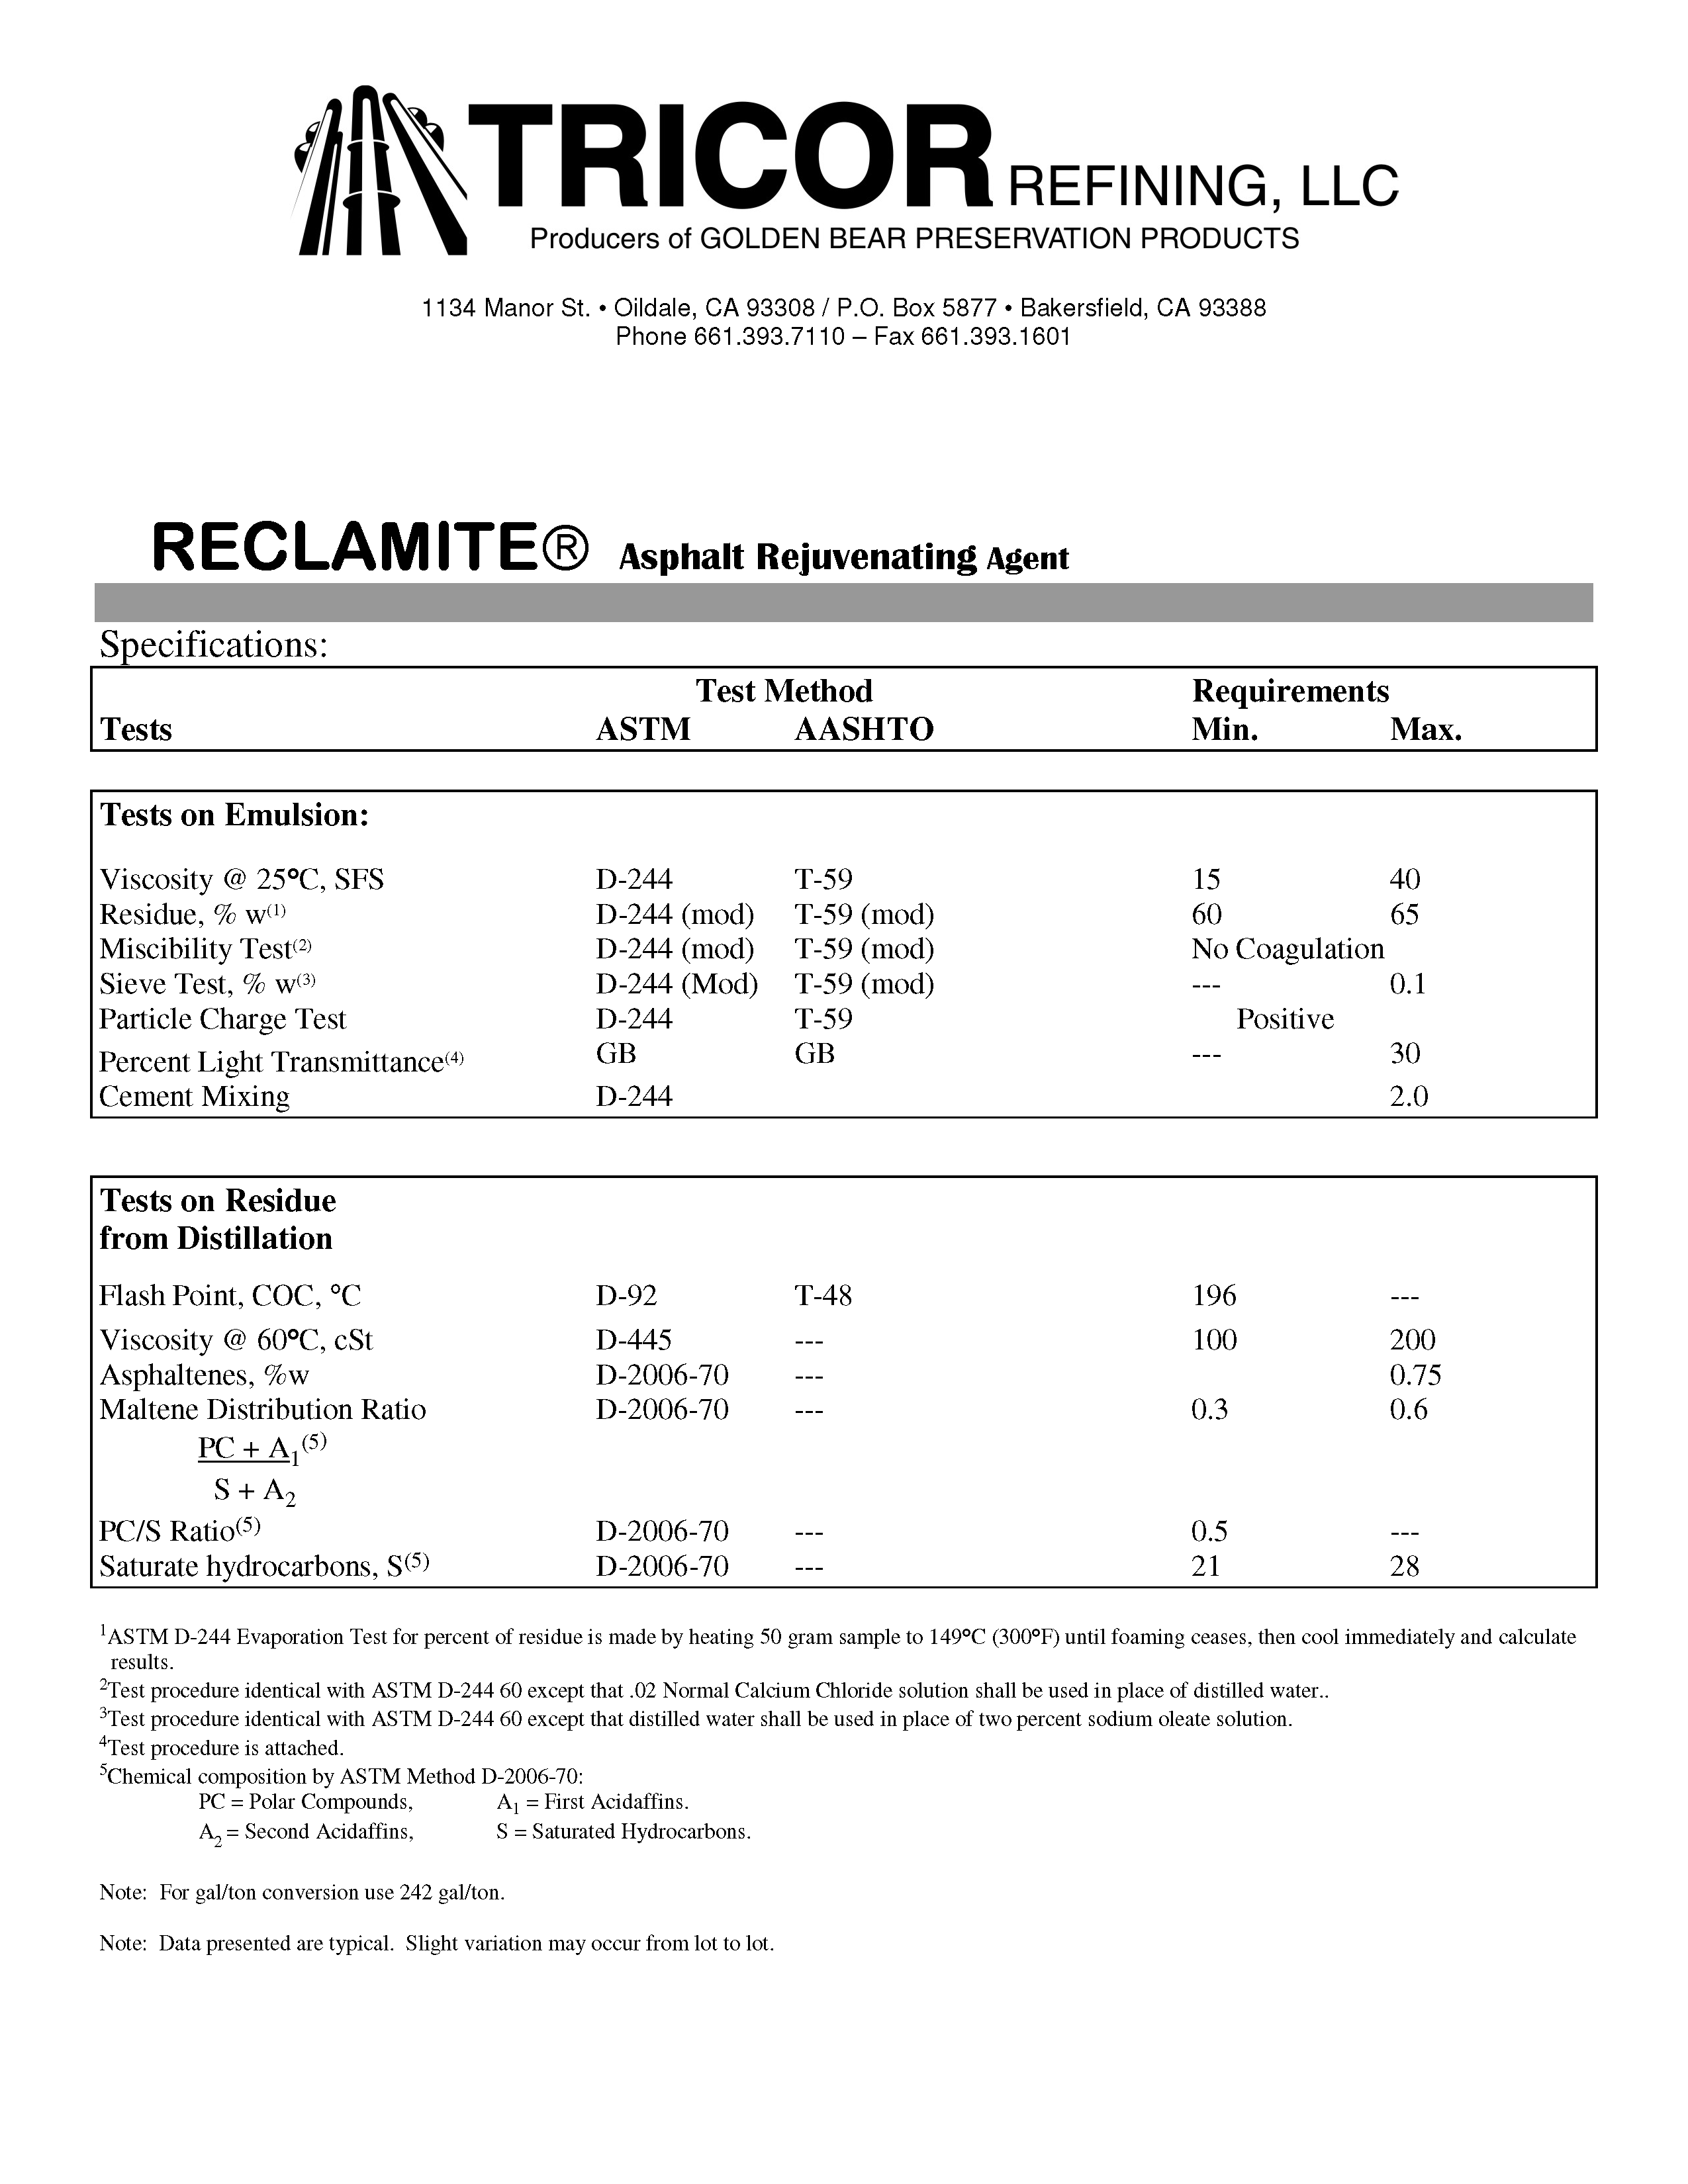 Reclamite Specification